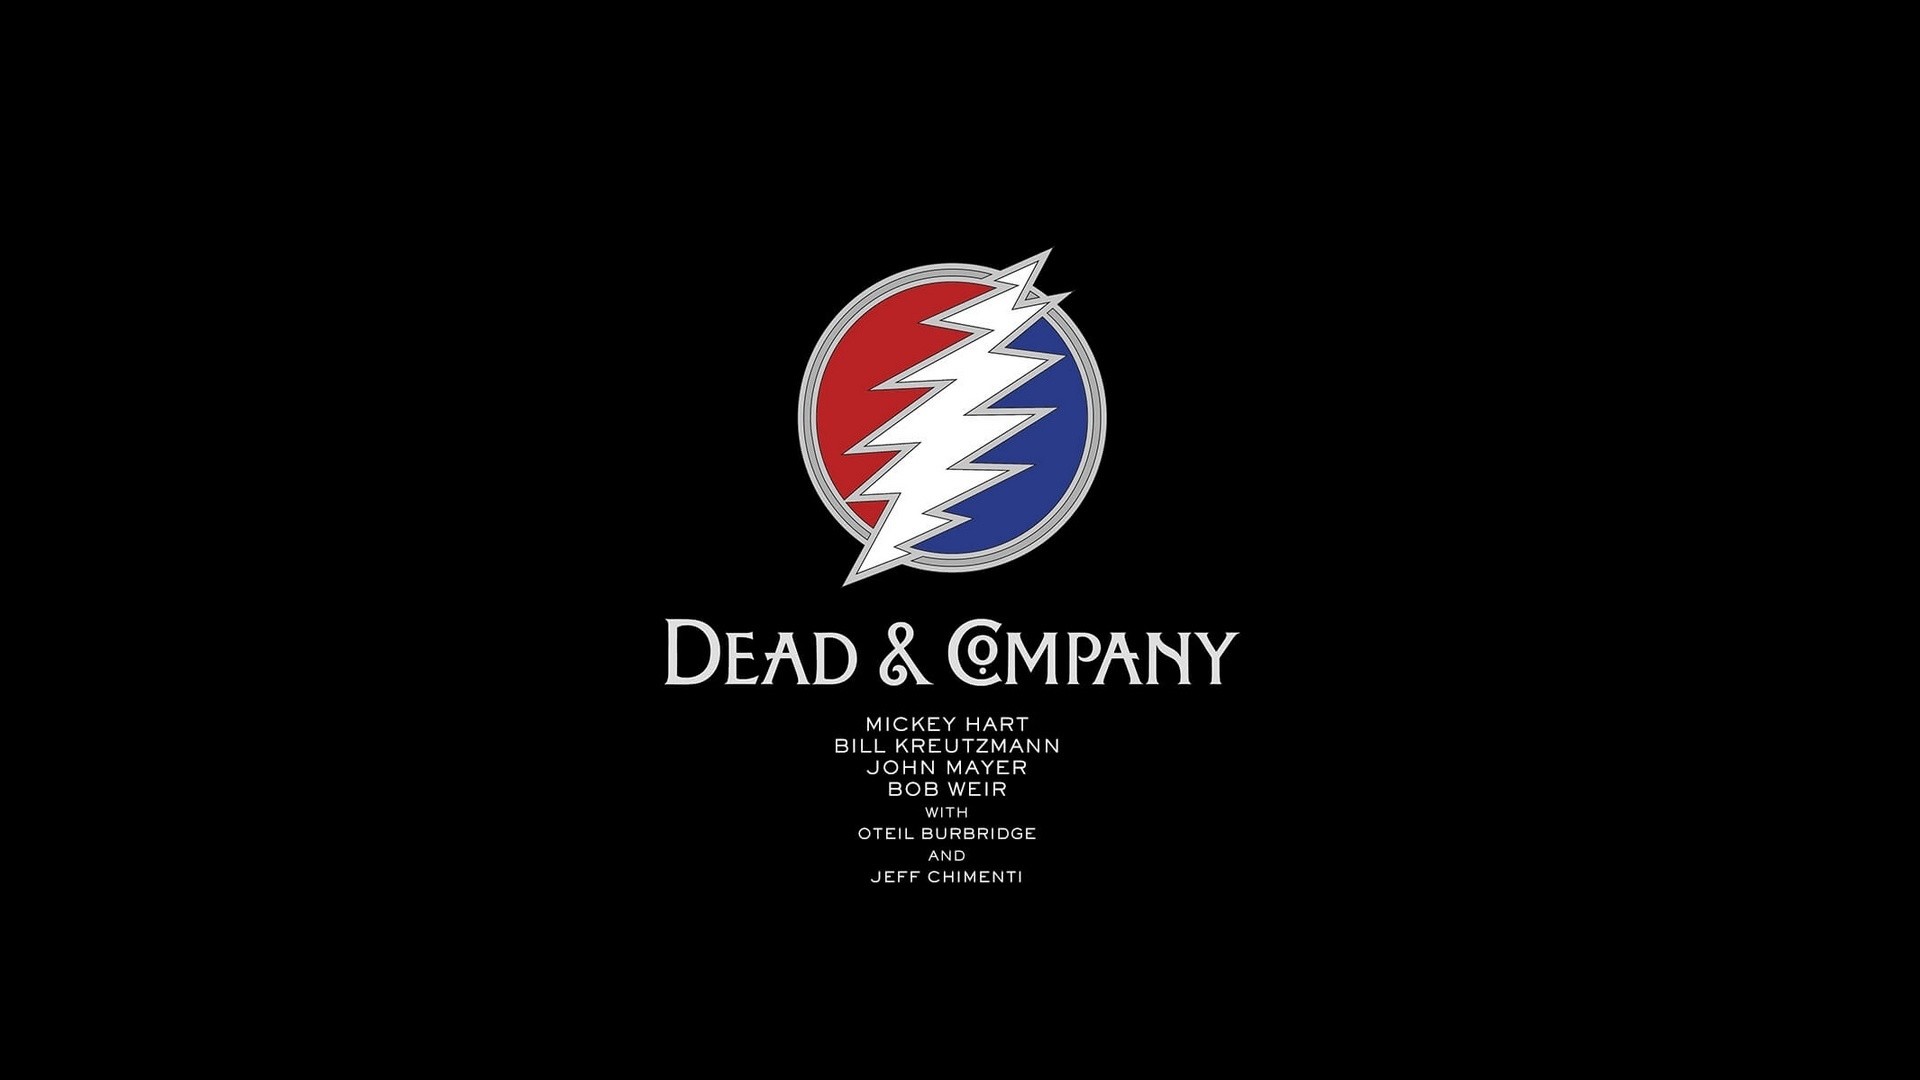 Dead company. Grateful Dead "Buffalo 5/9/77". Dead Company logo. John Mayer grateful Dead.